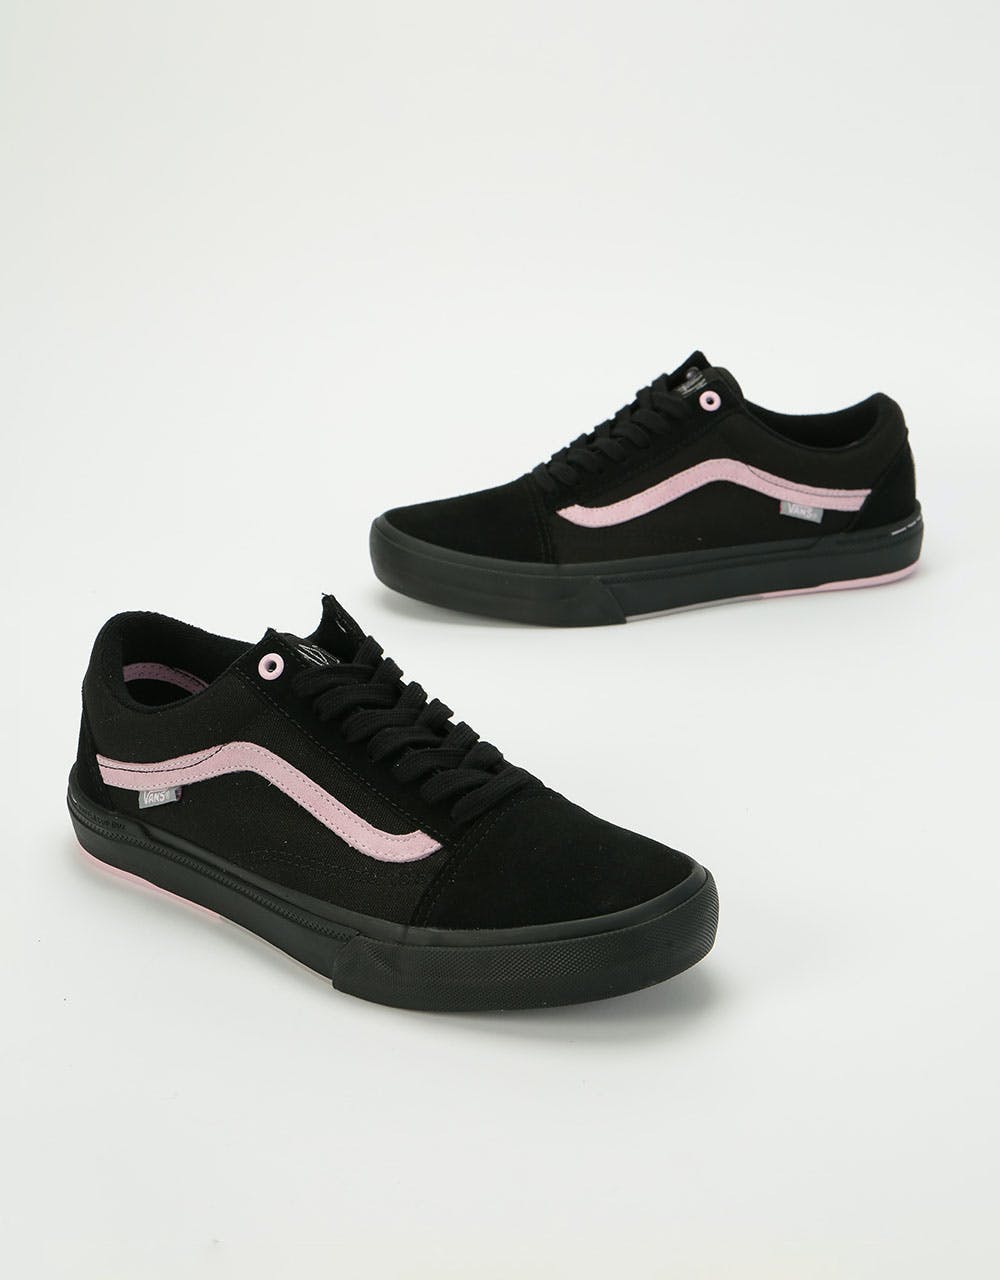 Vans Old Skool BMX Skate Shoes - (Matthias Dandois) Black/Pink